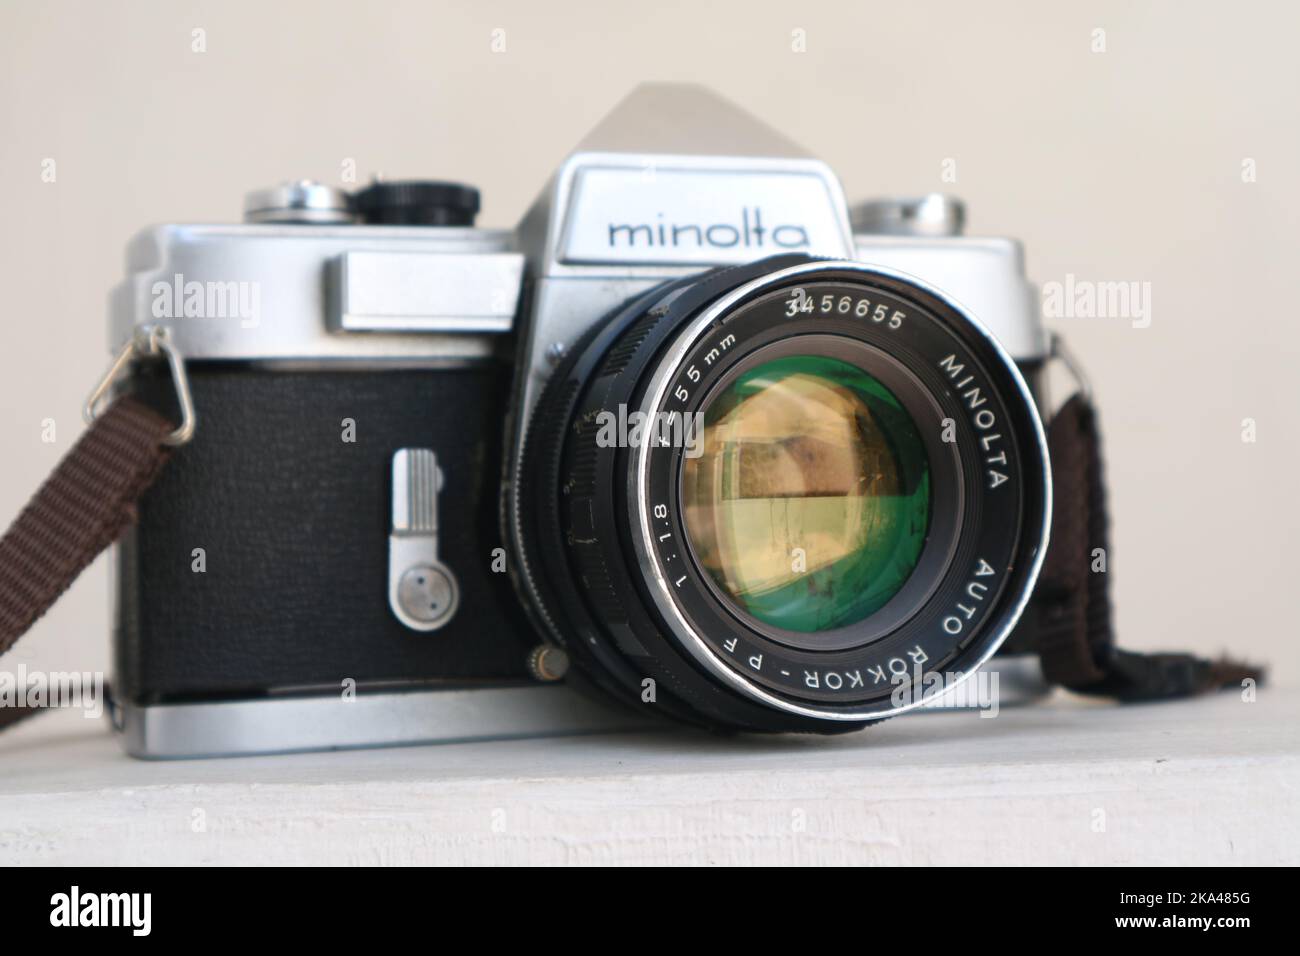 Minolta analoge kamera -Fotos und -Bildmaterial in hoher Auflösung – Alamy